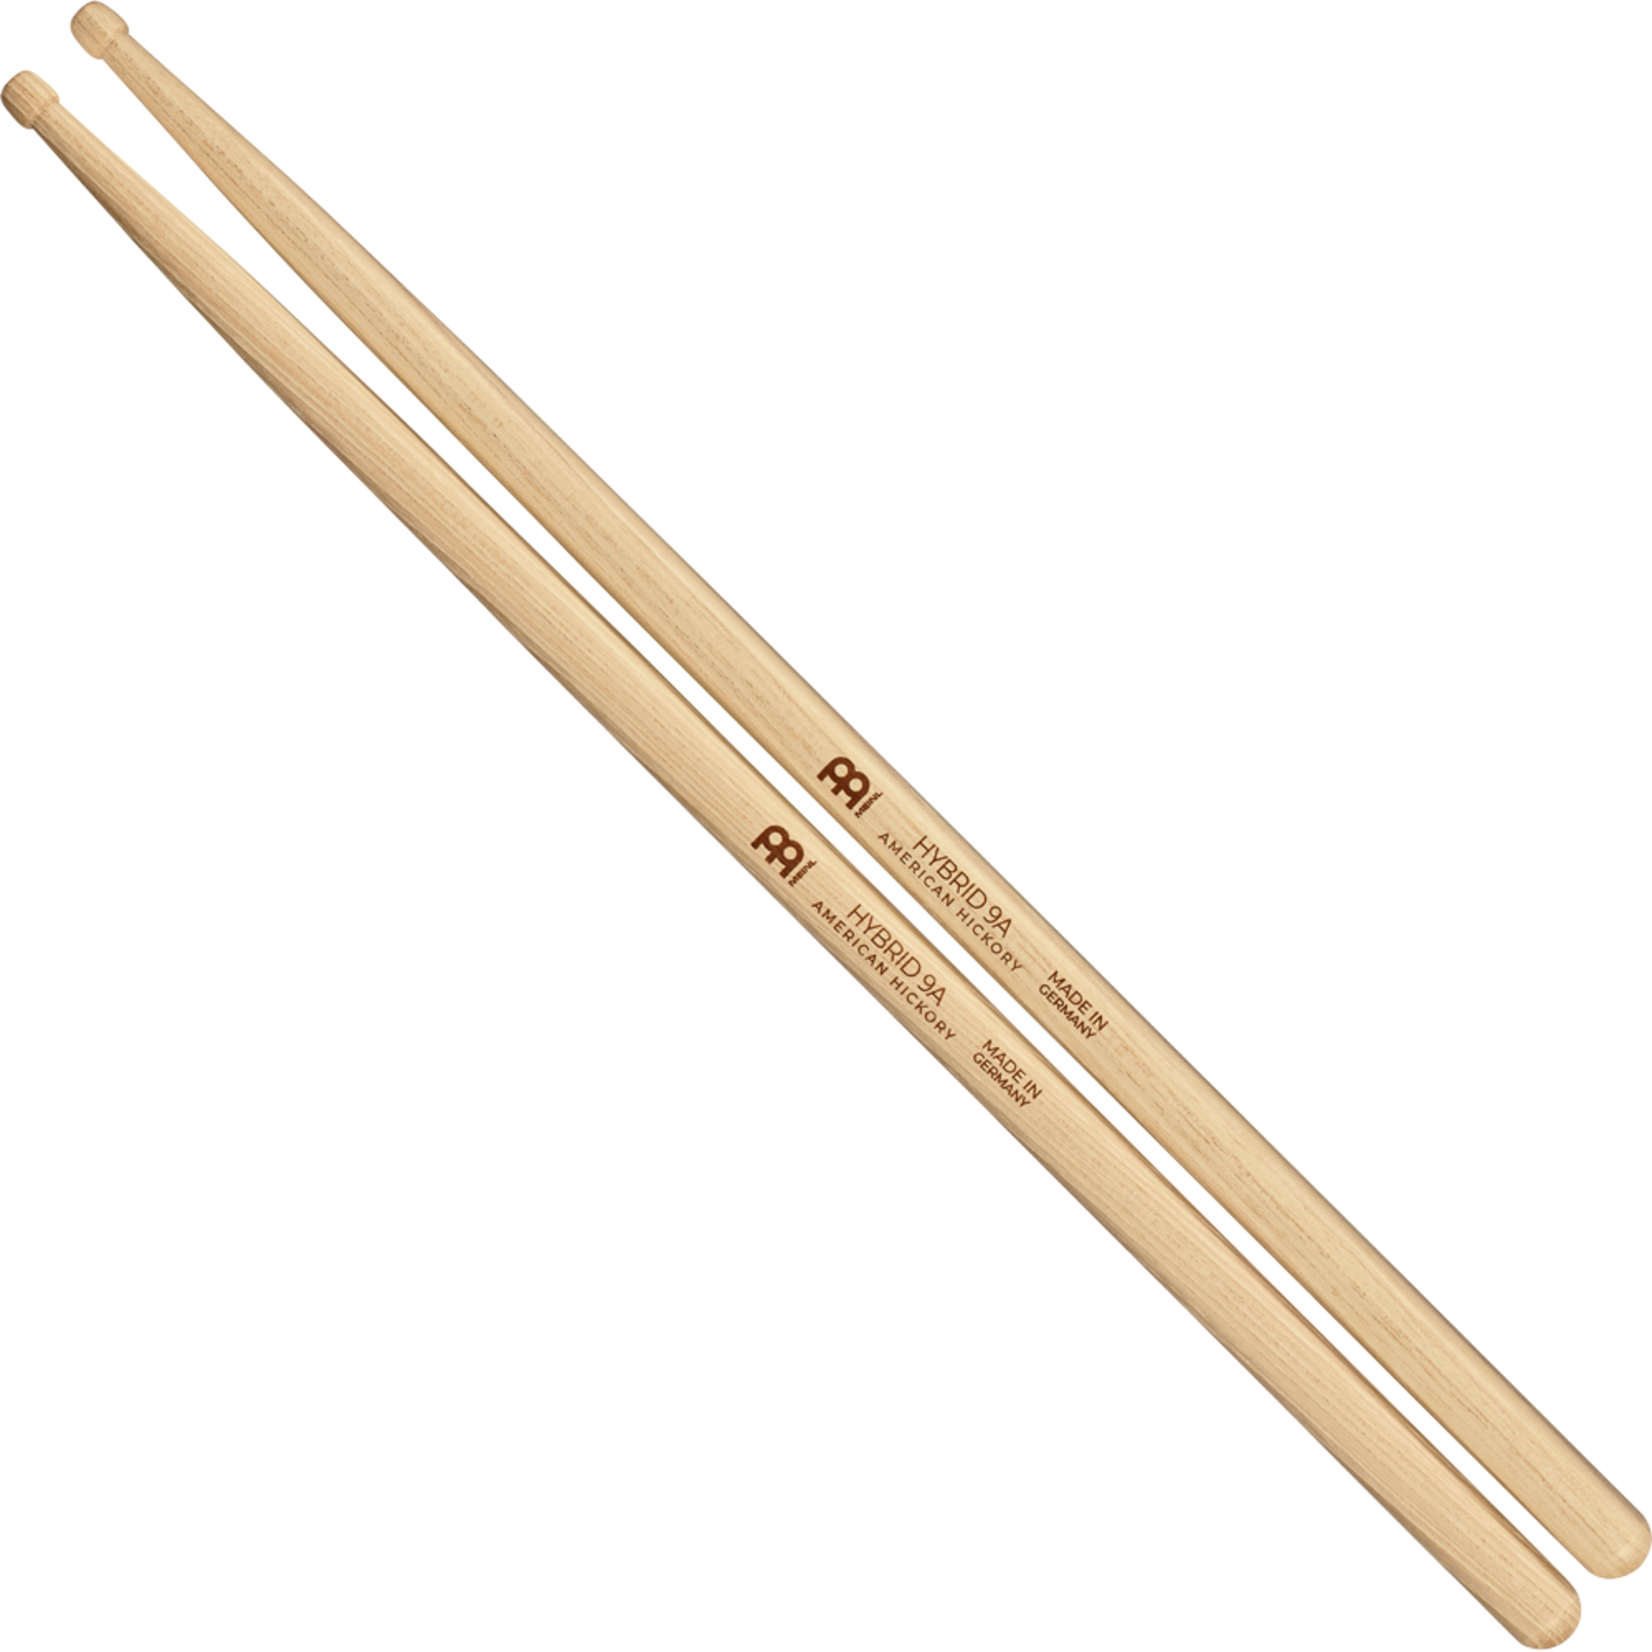 Meinl Meinl Hybrid 9A Hickory Drum Stick, Hybrid Tip SB133